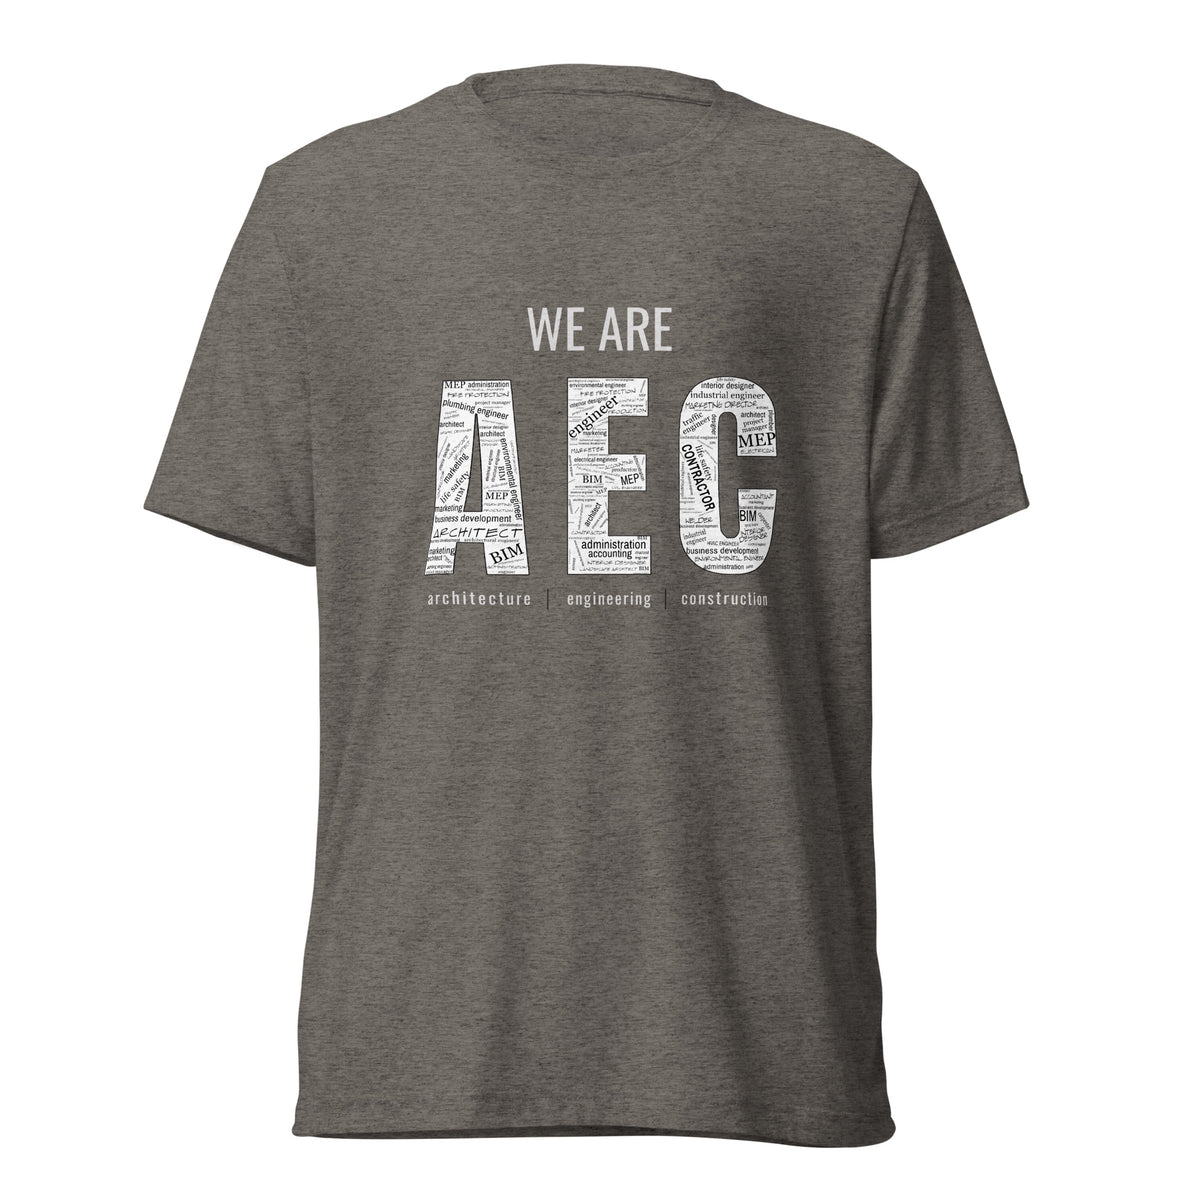 We are AEC | Engineer & Land Surveyor Cover